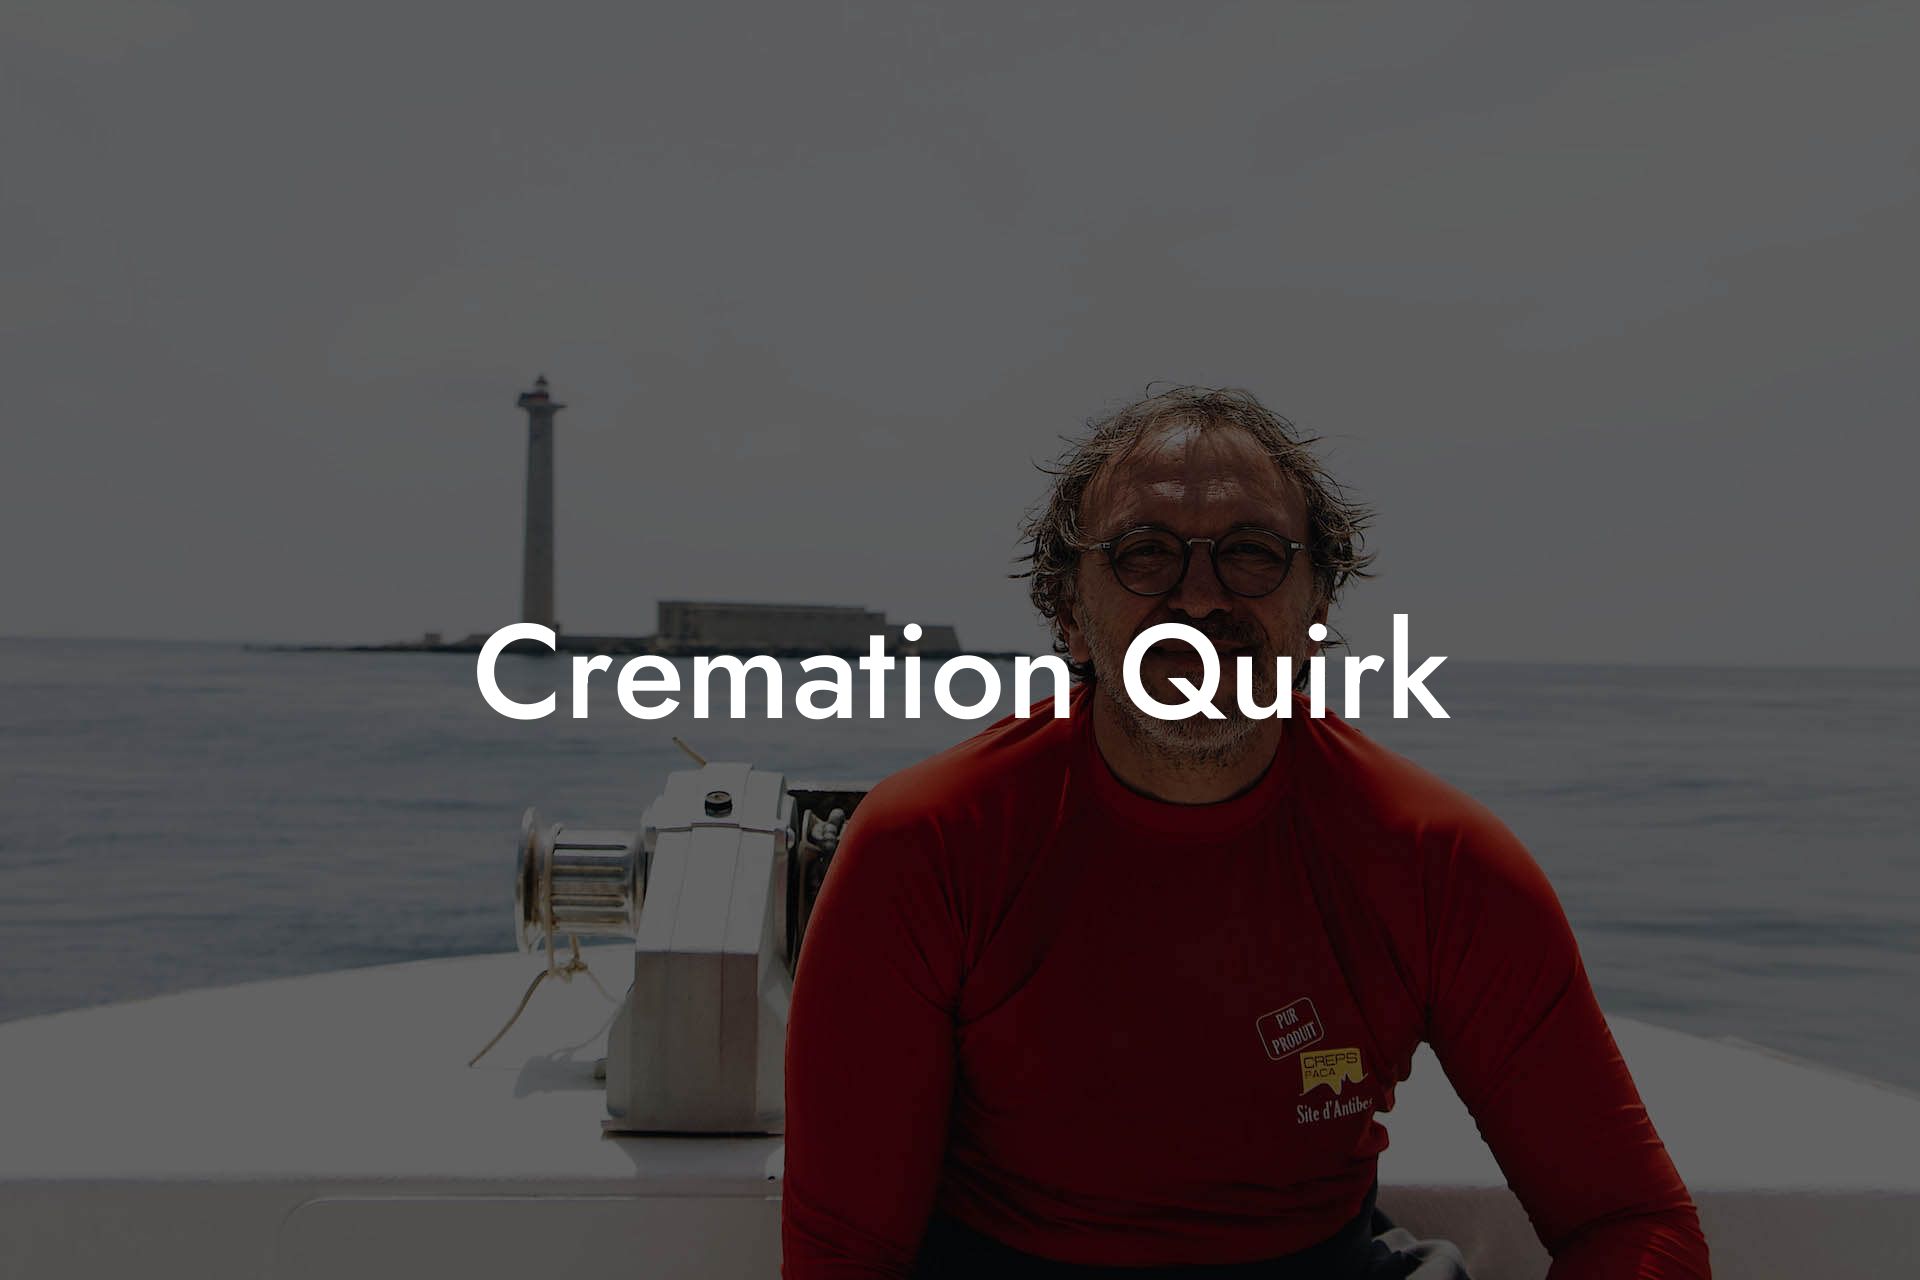 Cremation Quirk